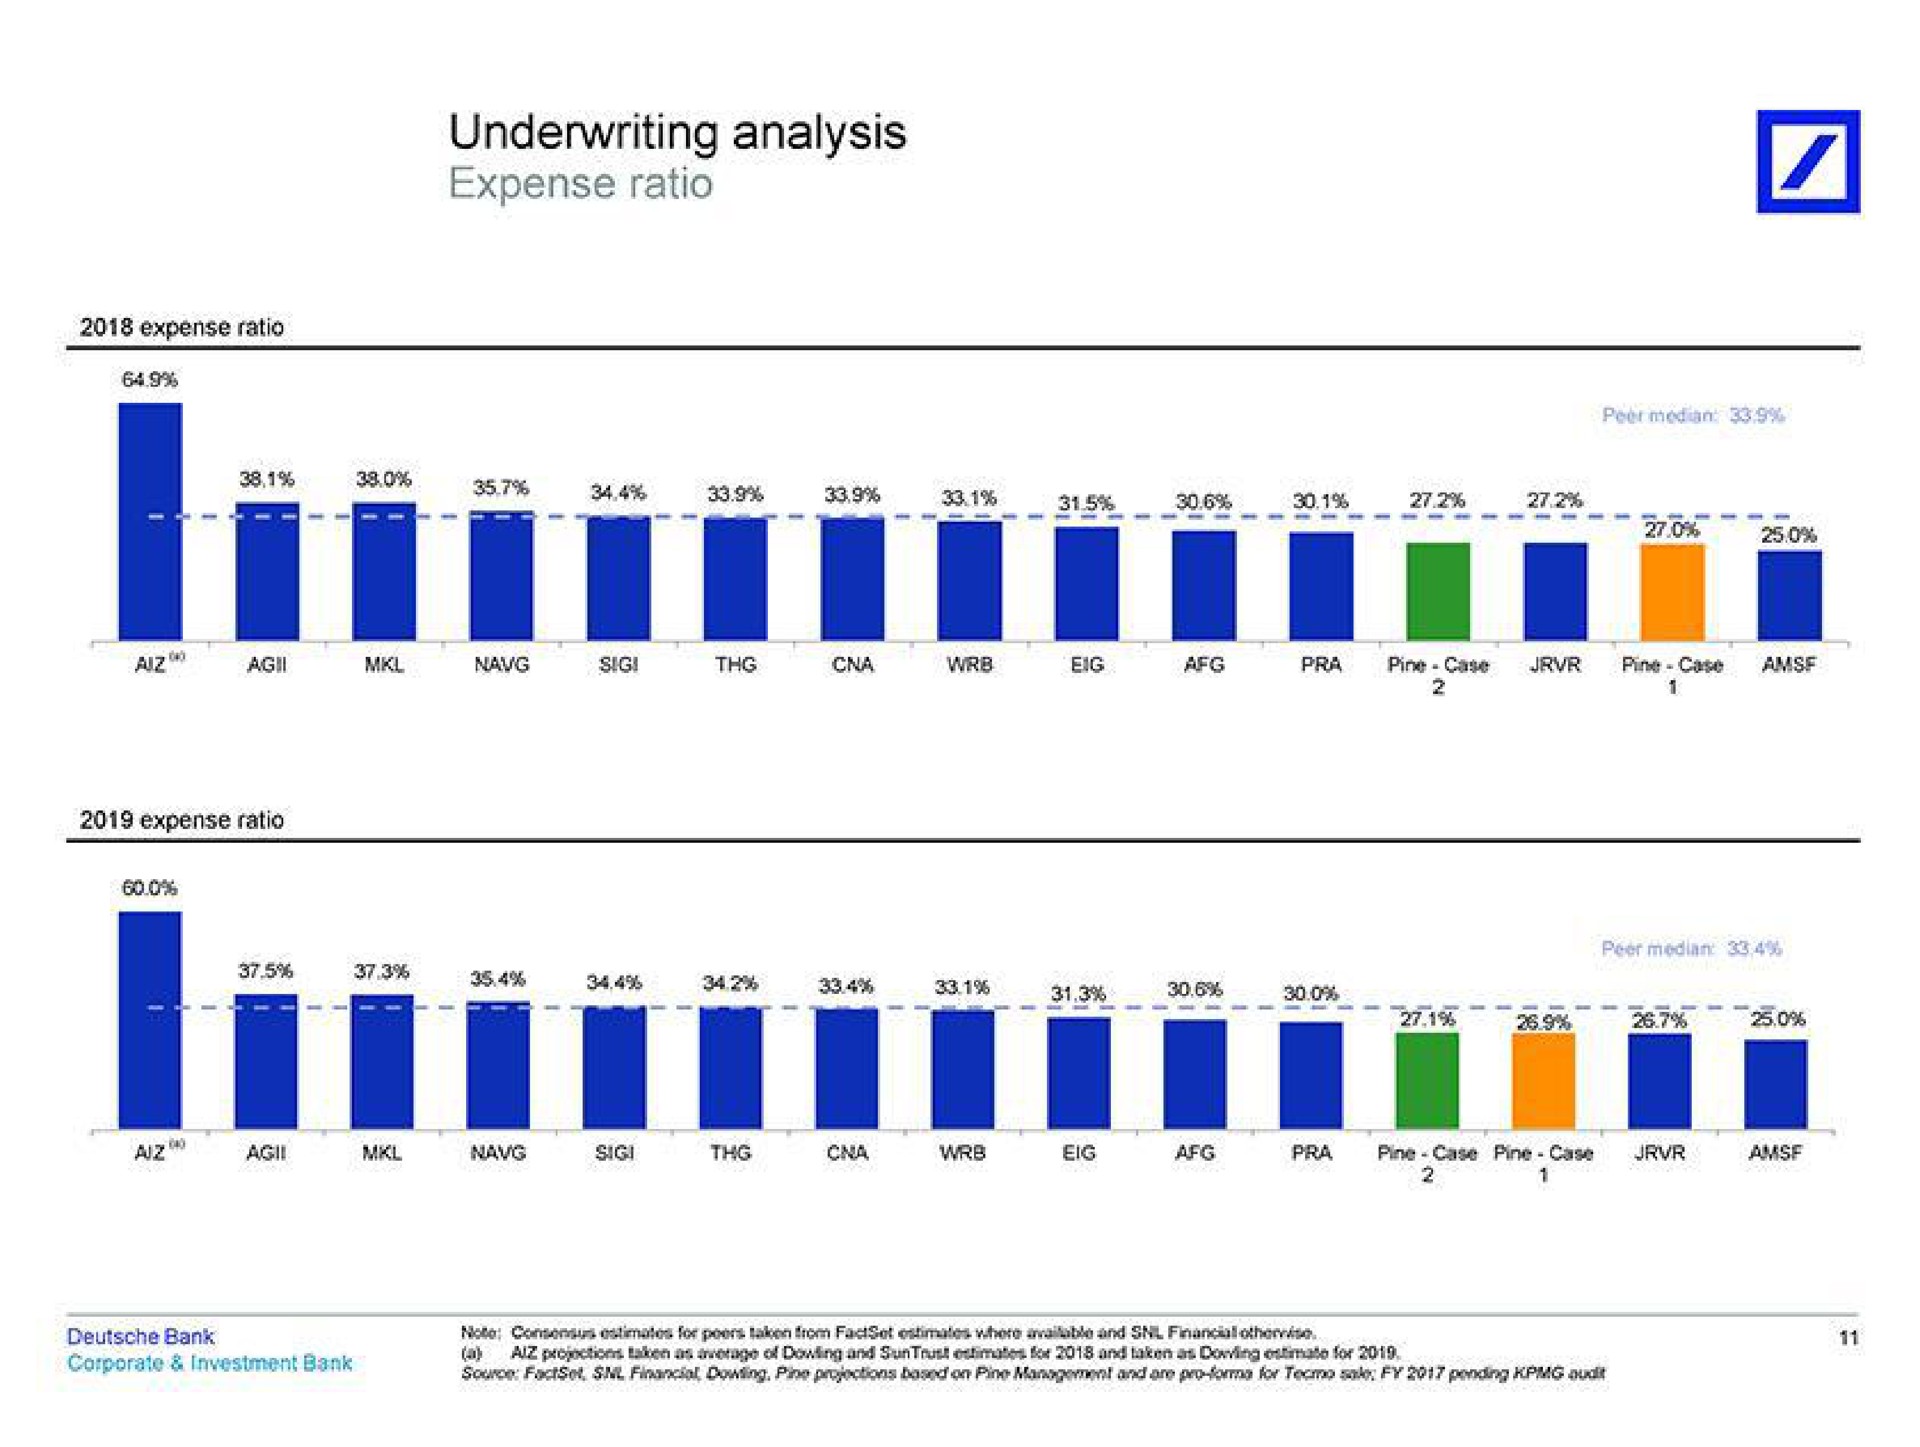 underwriting analysis expense ratio | Deutsche Bank